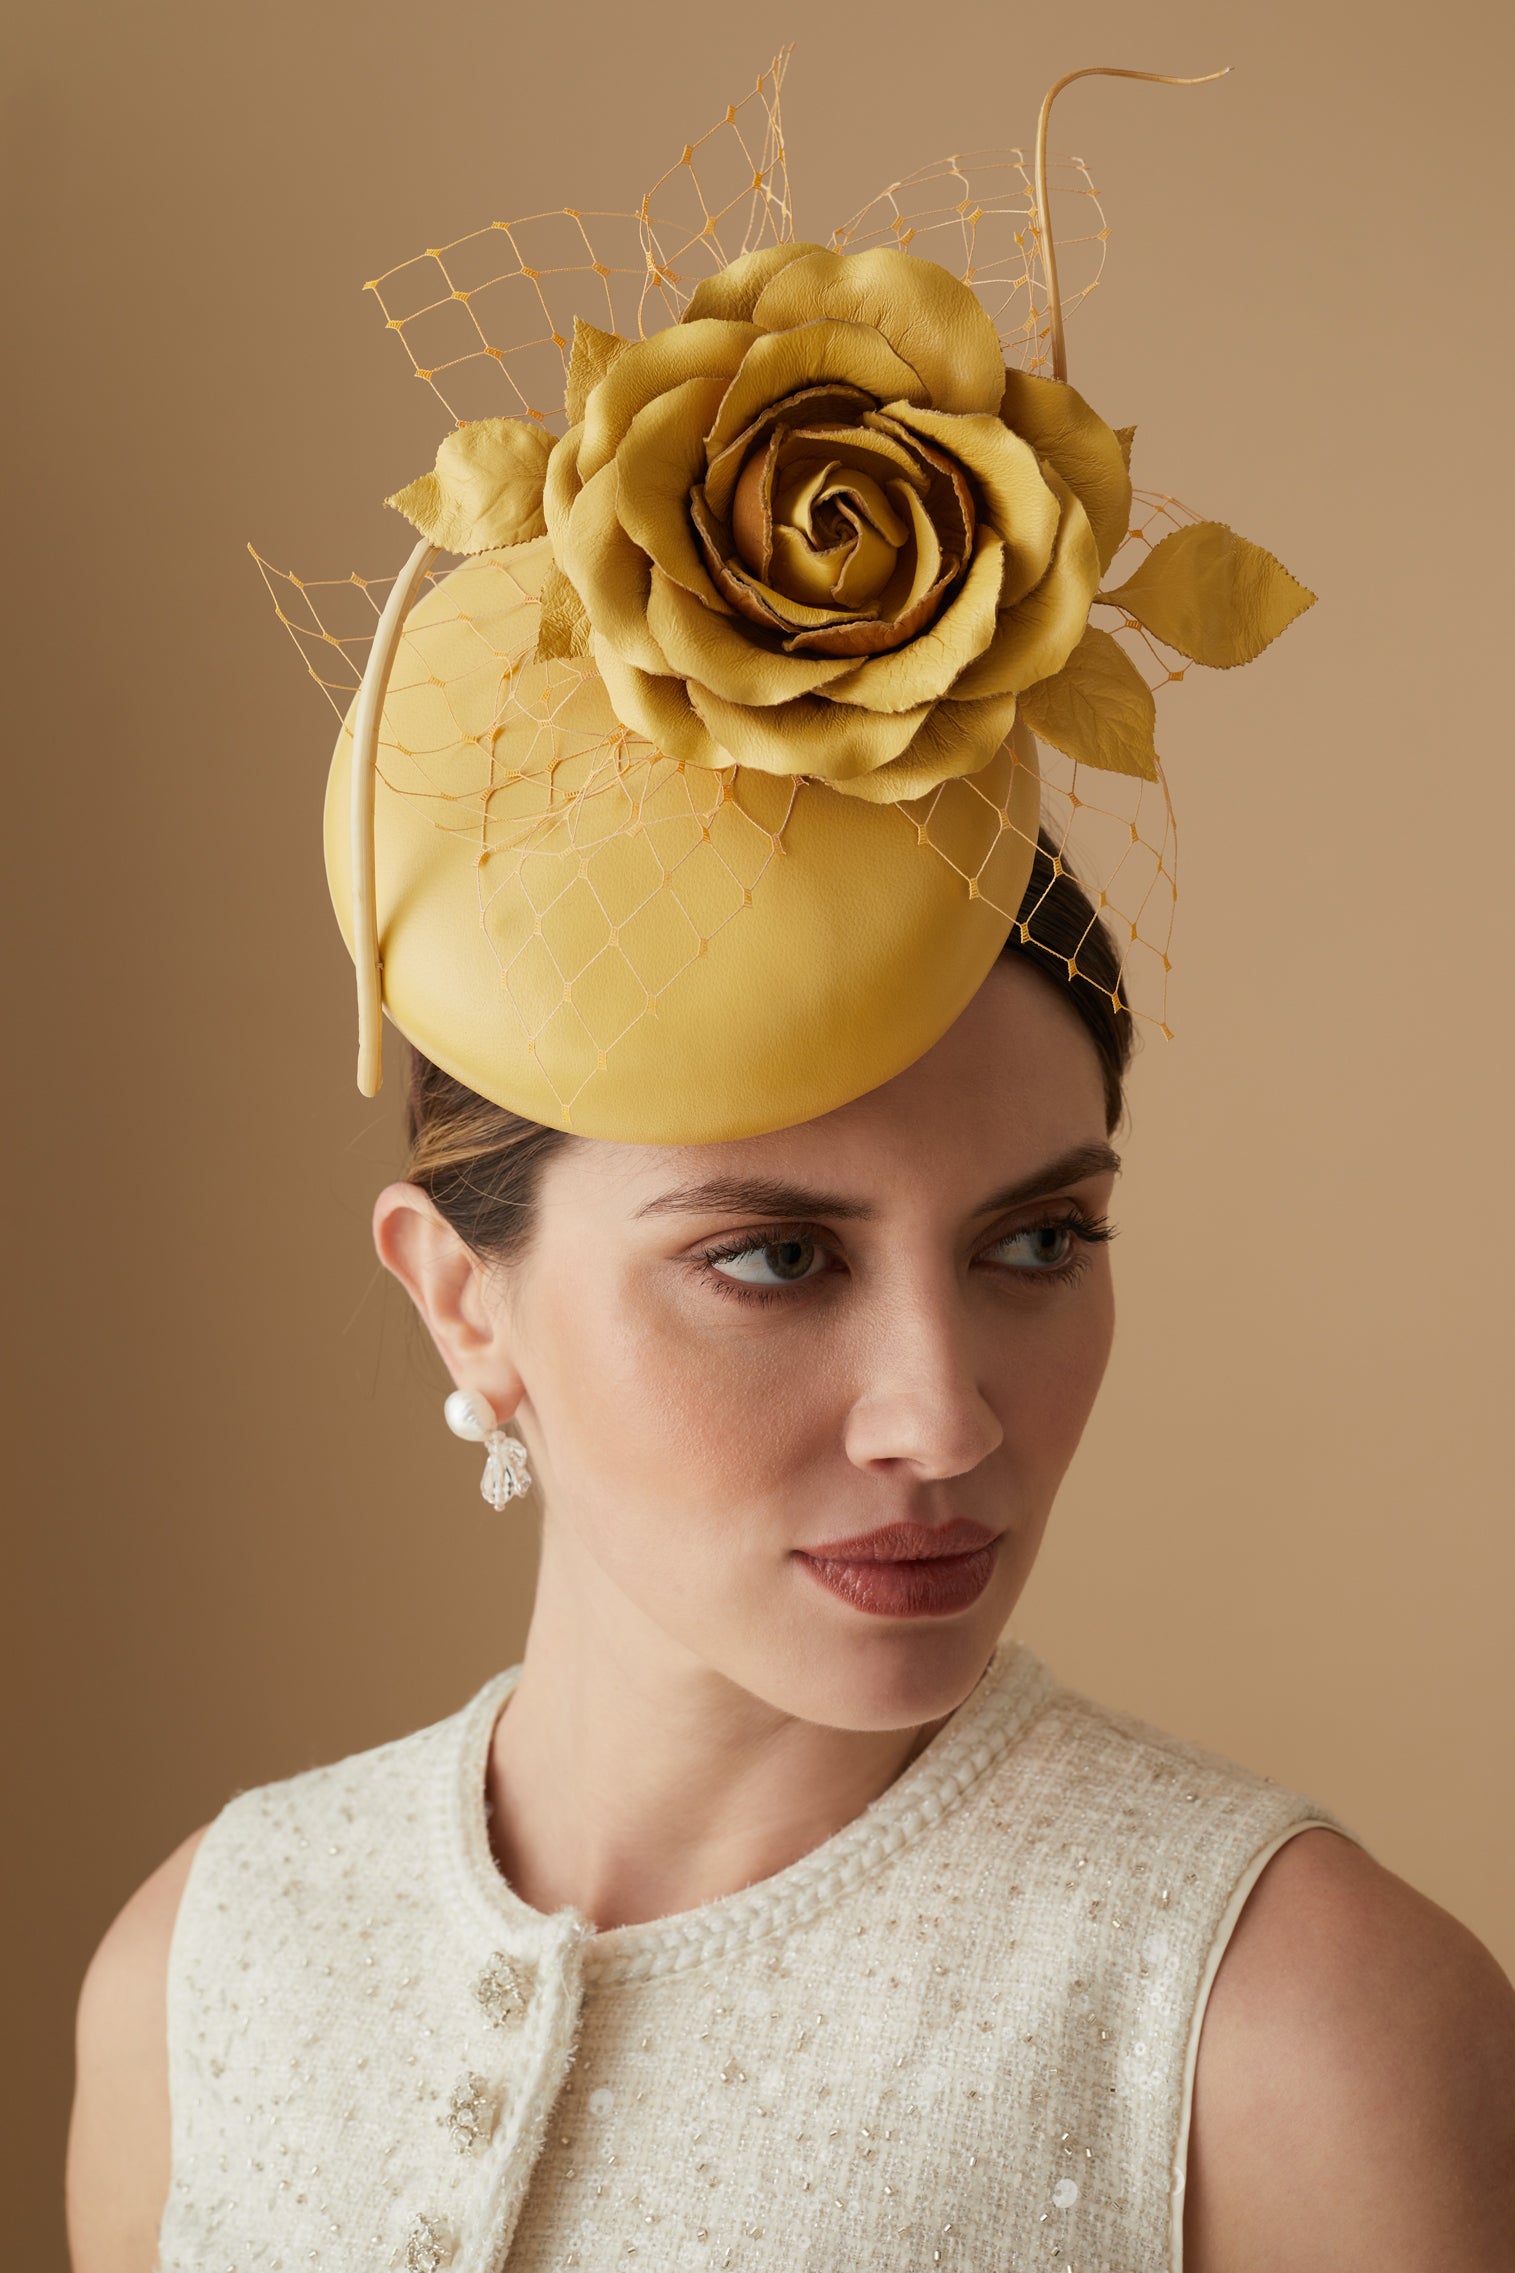 Rose Bud Yellow Leather Percher Hat - Royal Ascot Hats - Lock & Co. Hatters London UK